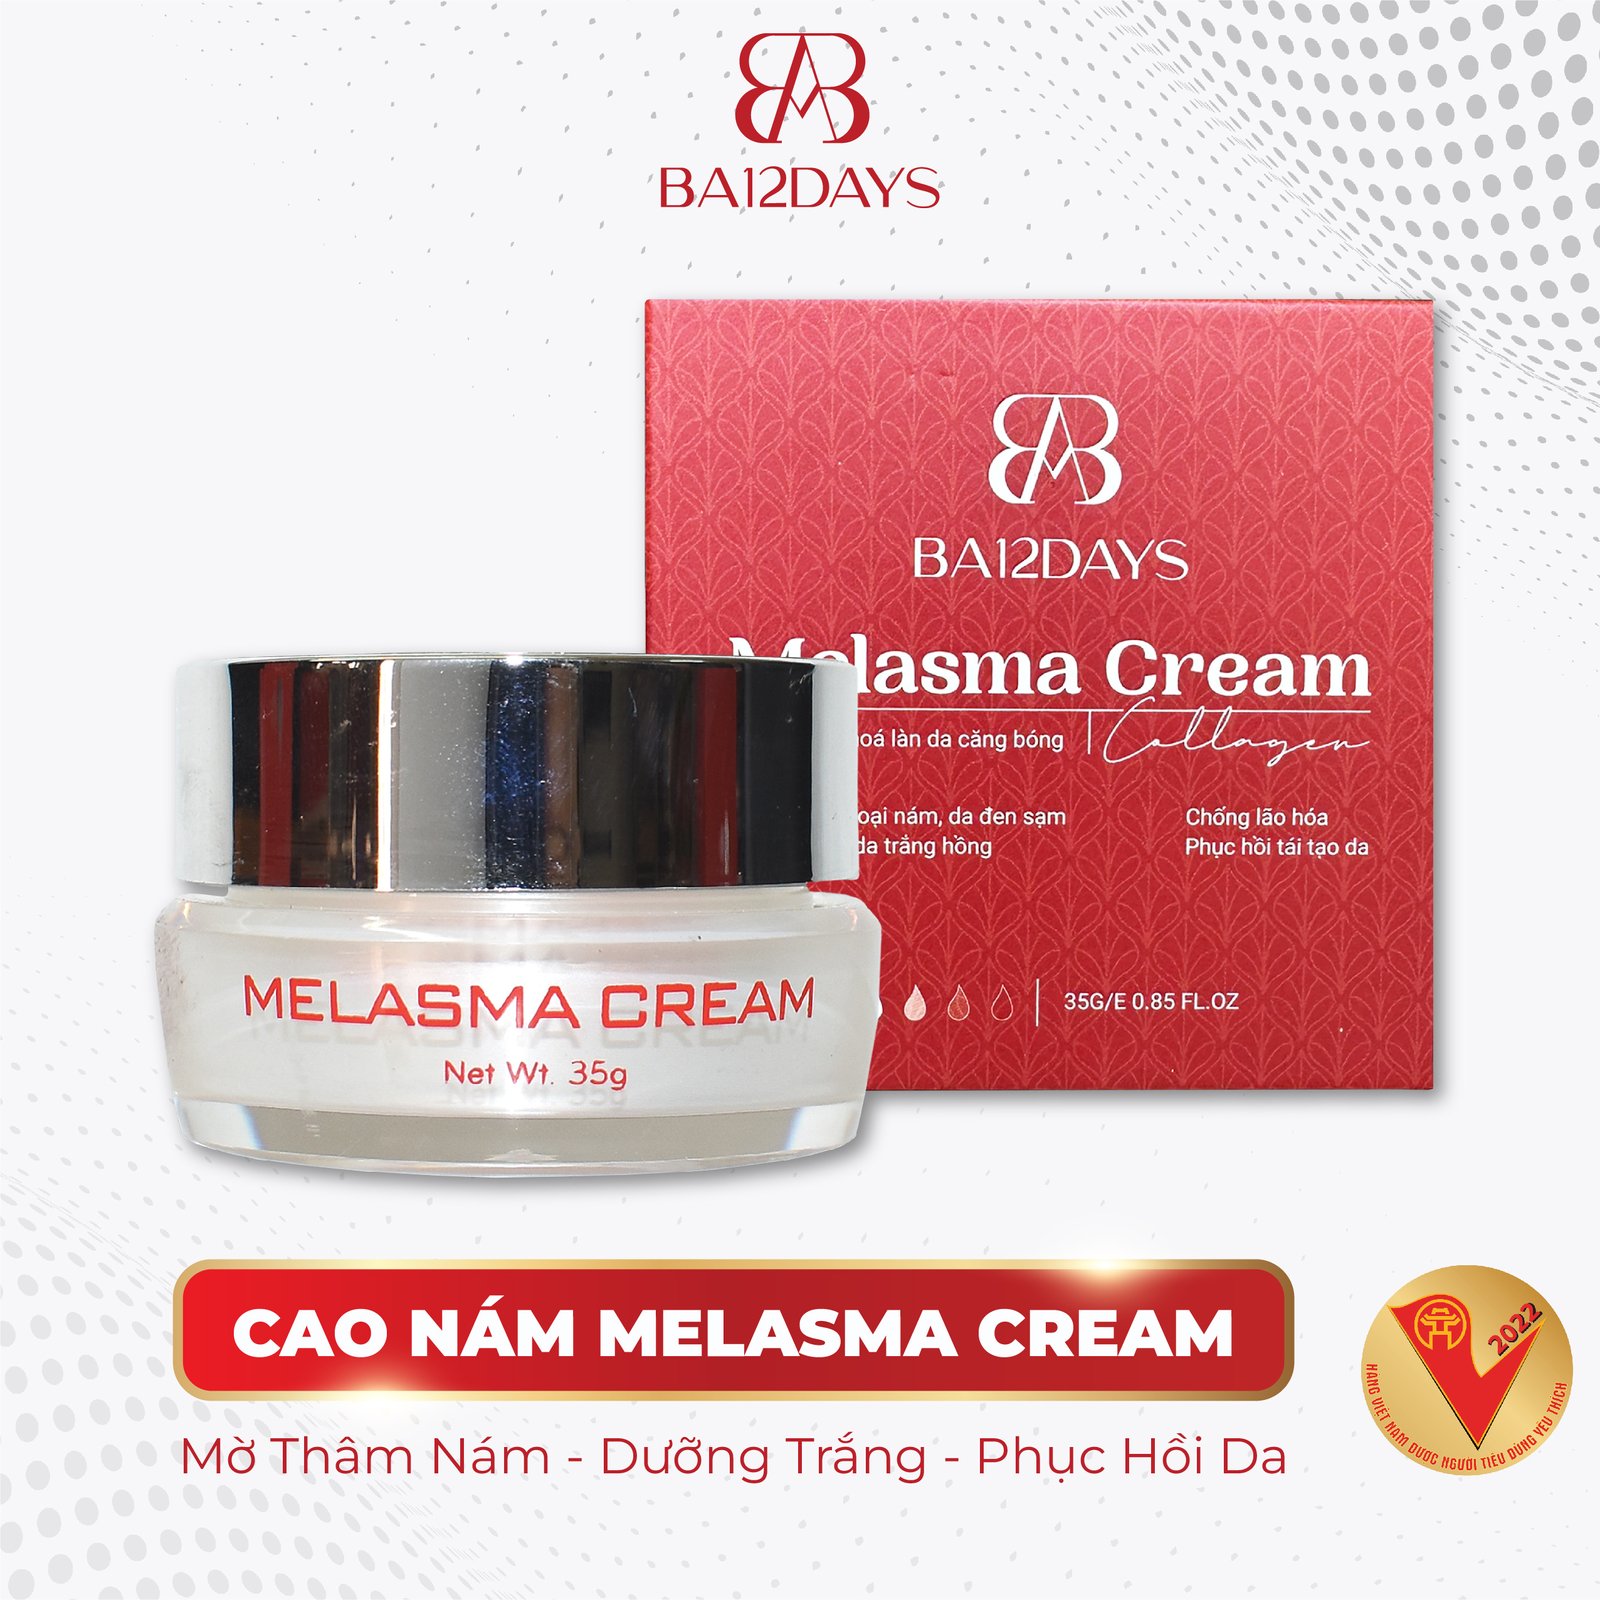 Cao Chữa Nám Tàn Nhang Melasma Cream - Ba12days Cosmetics